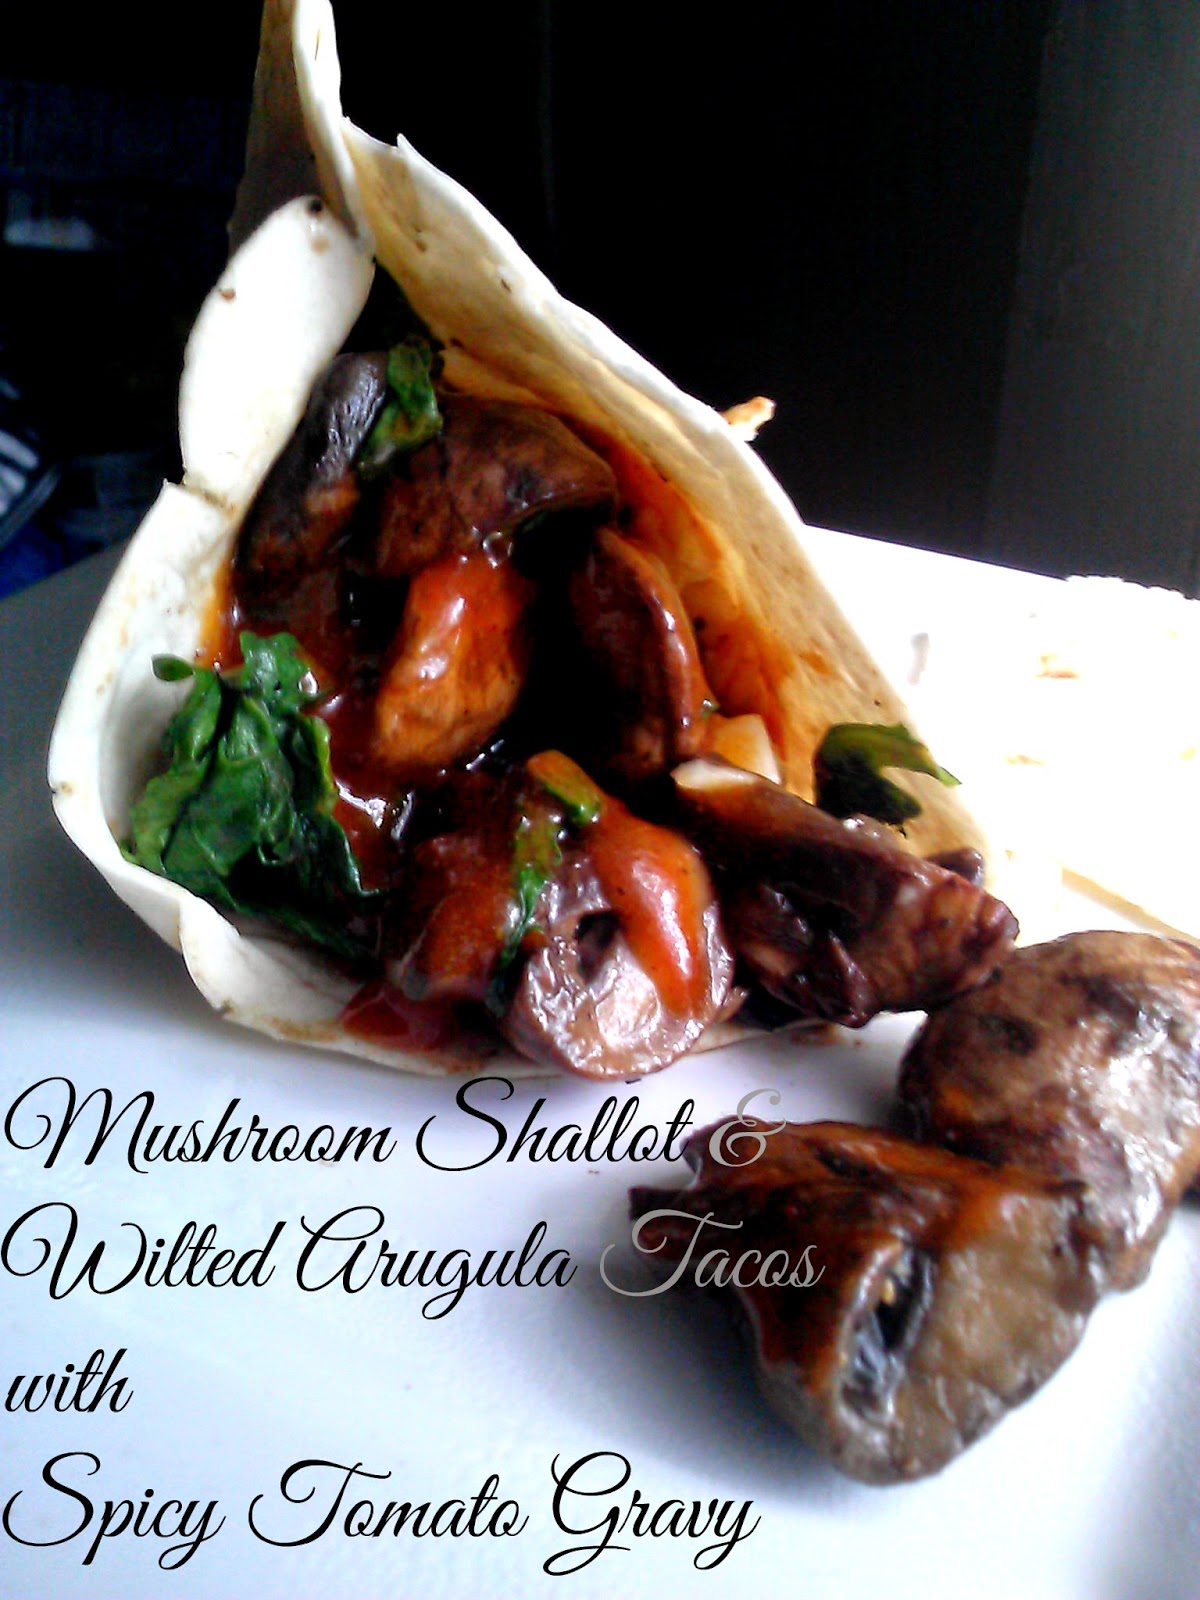 Mushroom, Shallot & Wilted Arugula Tacos with Spicy Tomato Gravy